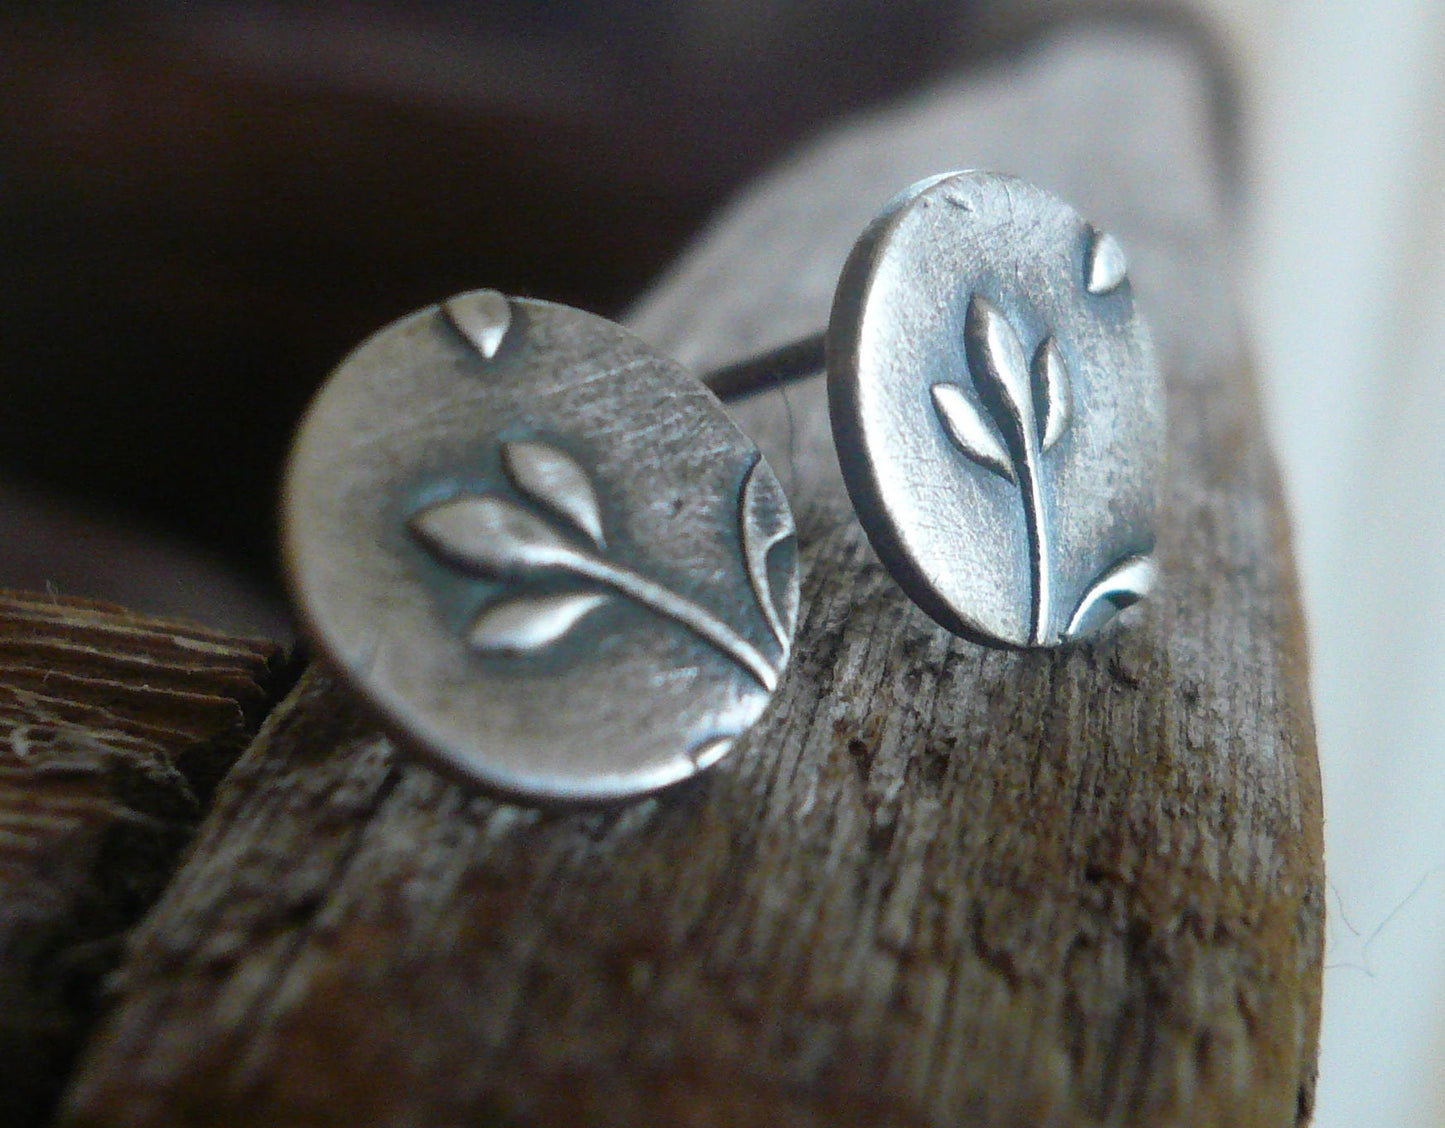 Botanical Stud Earrings- Bud - Oxidized Sterling and Fine Silver Post Earrings. Handmade.